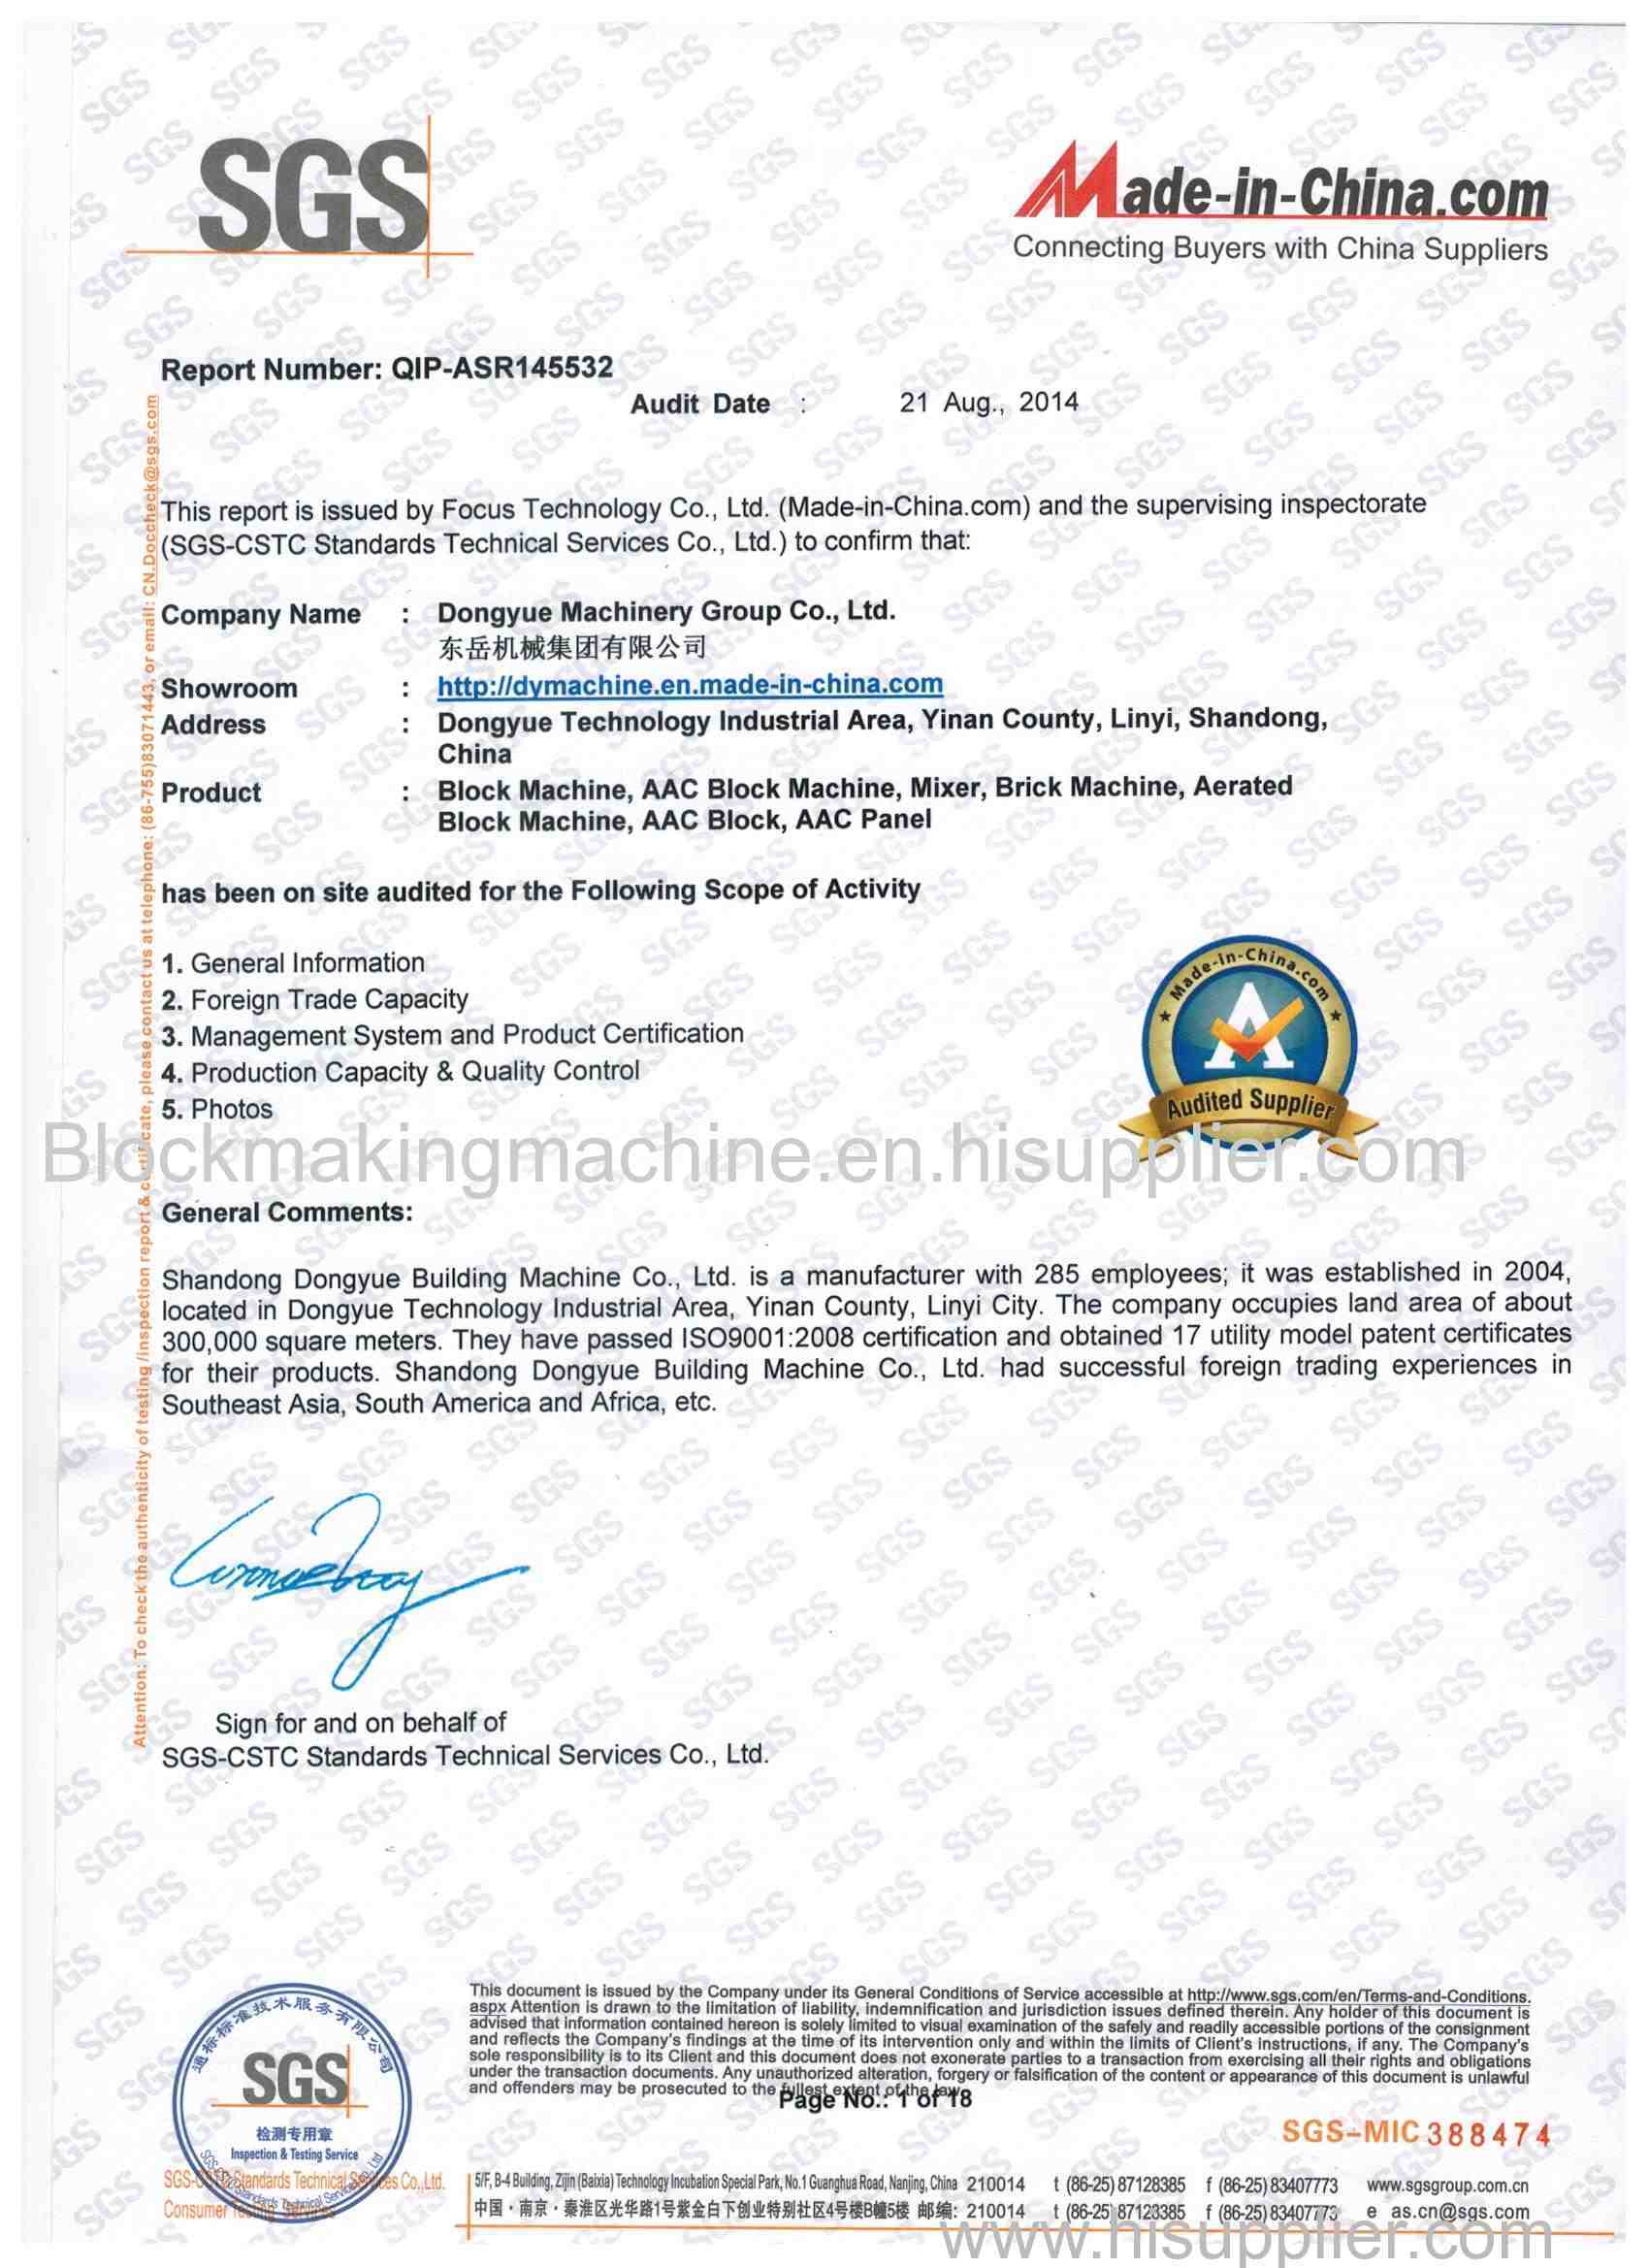 SGS certificate